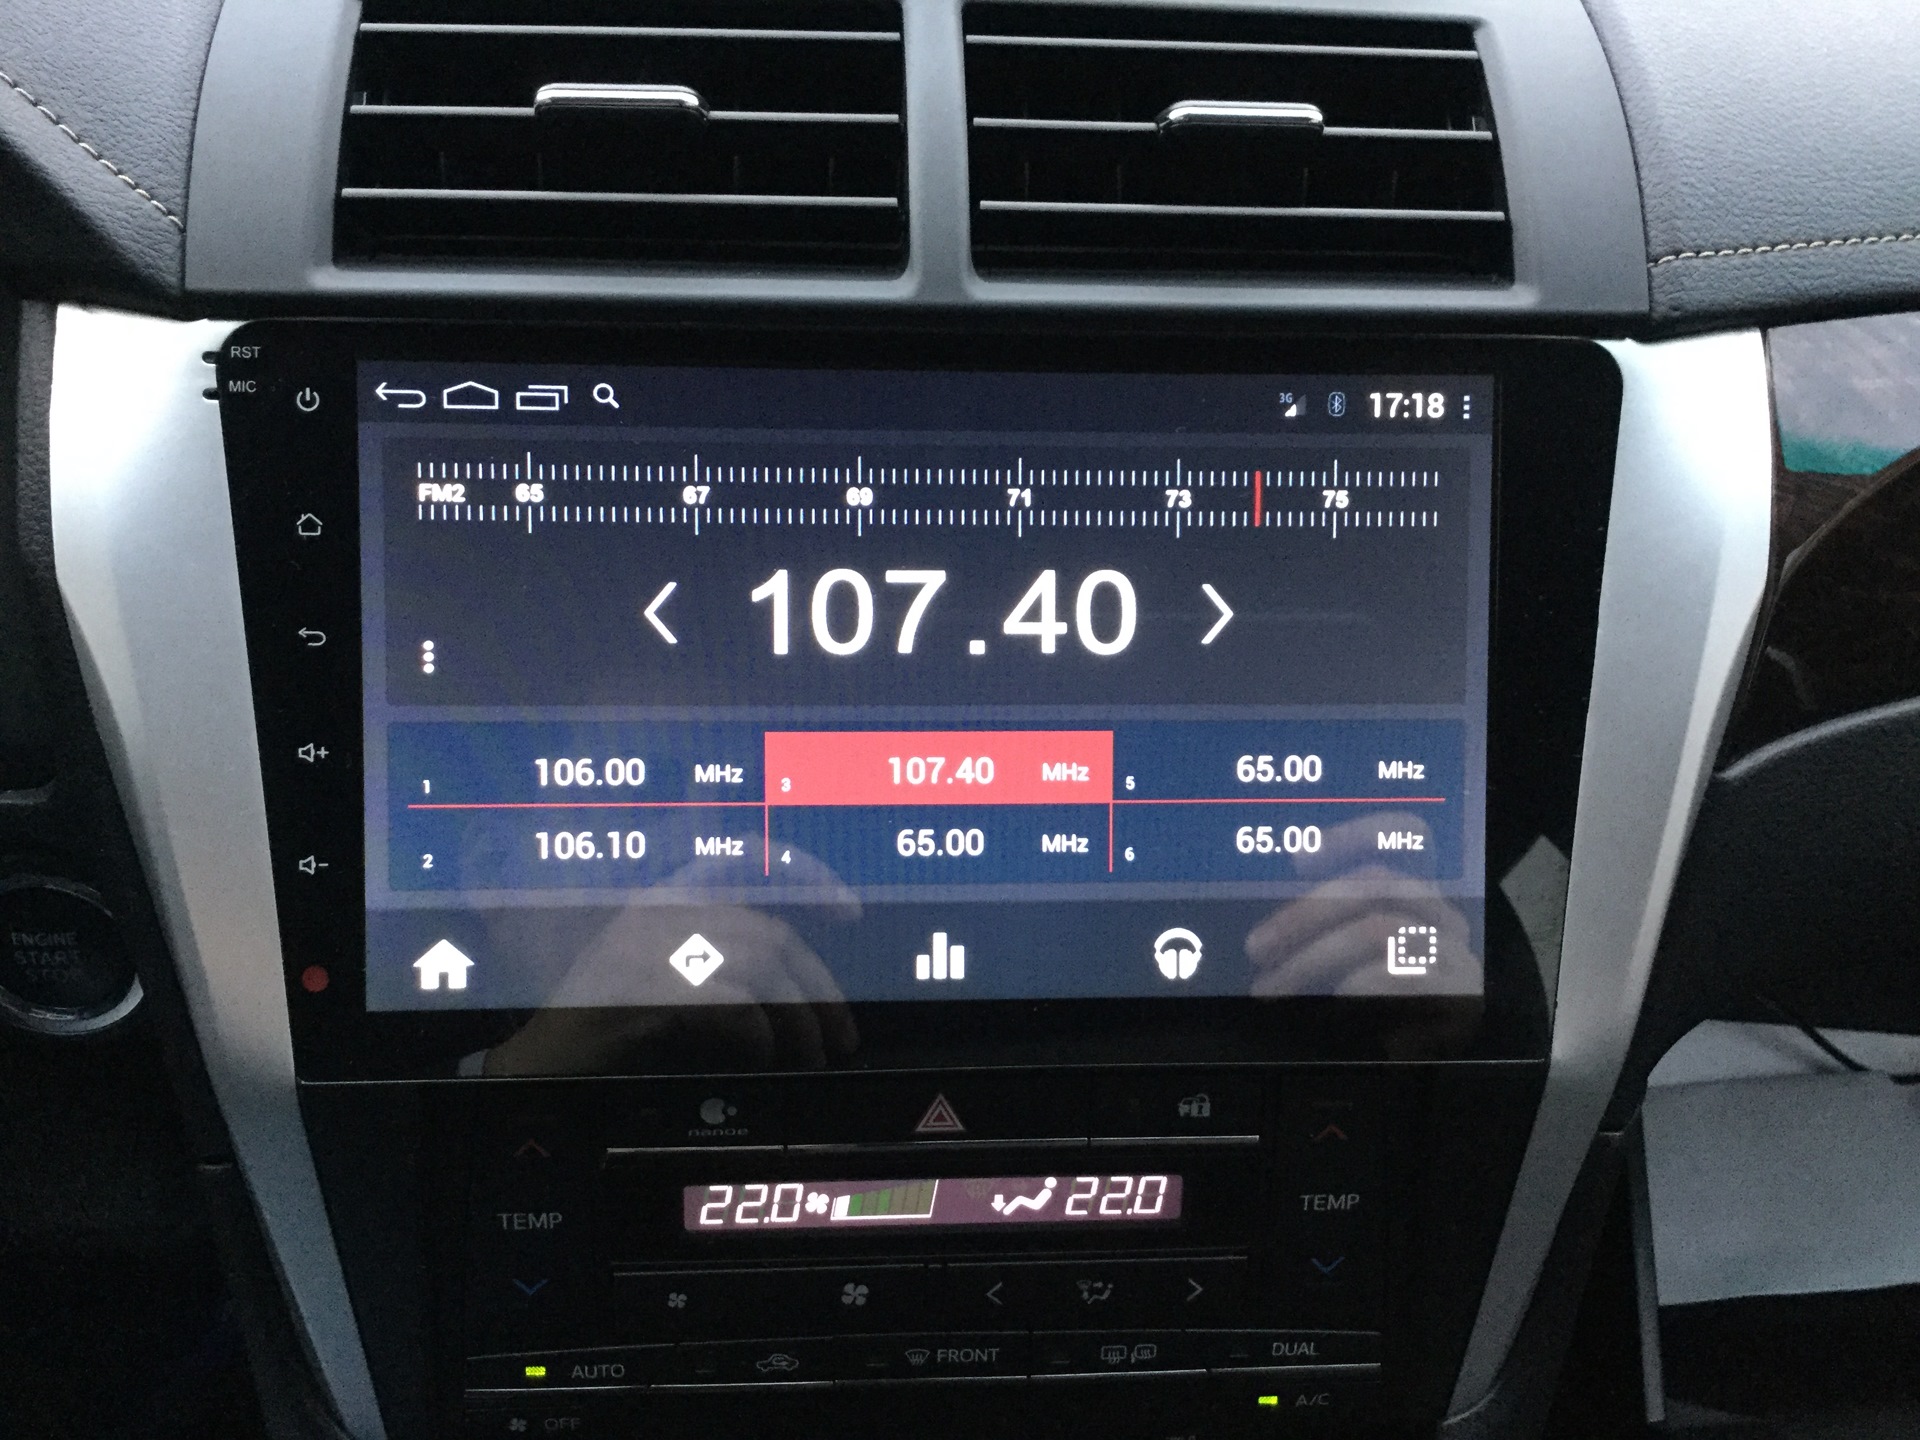 Android магнитола обзоры. Магнитола Инкар на андроиде 10 дюймов. Toyota Camry 2015-2018 магнитола 10 дюймов. Андроид магнитола 10.1 дюйма на приору. Магнитола андроид 10 дюймов ACV.